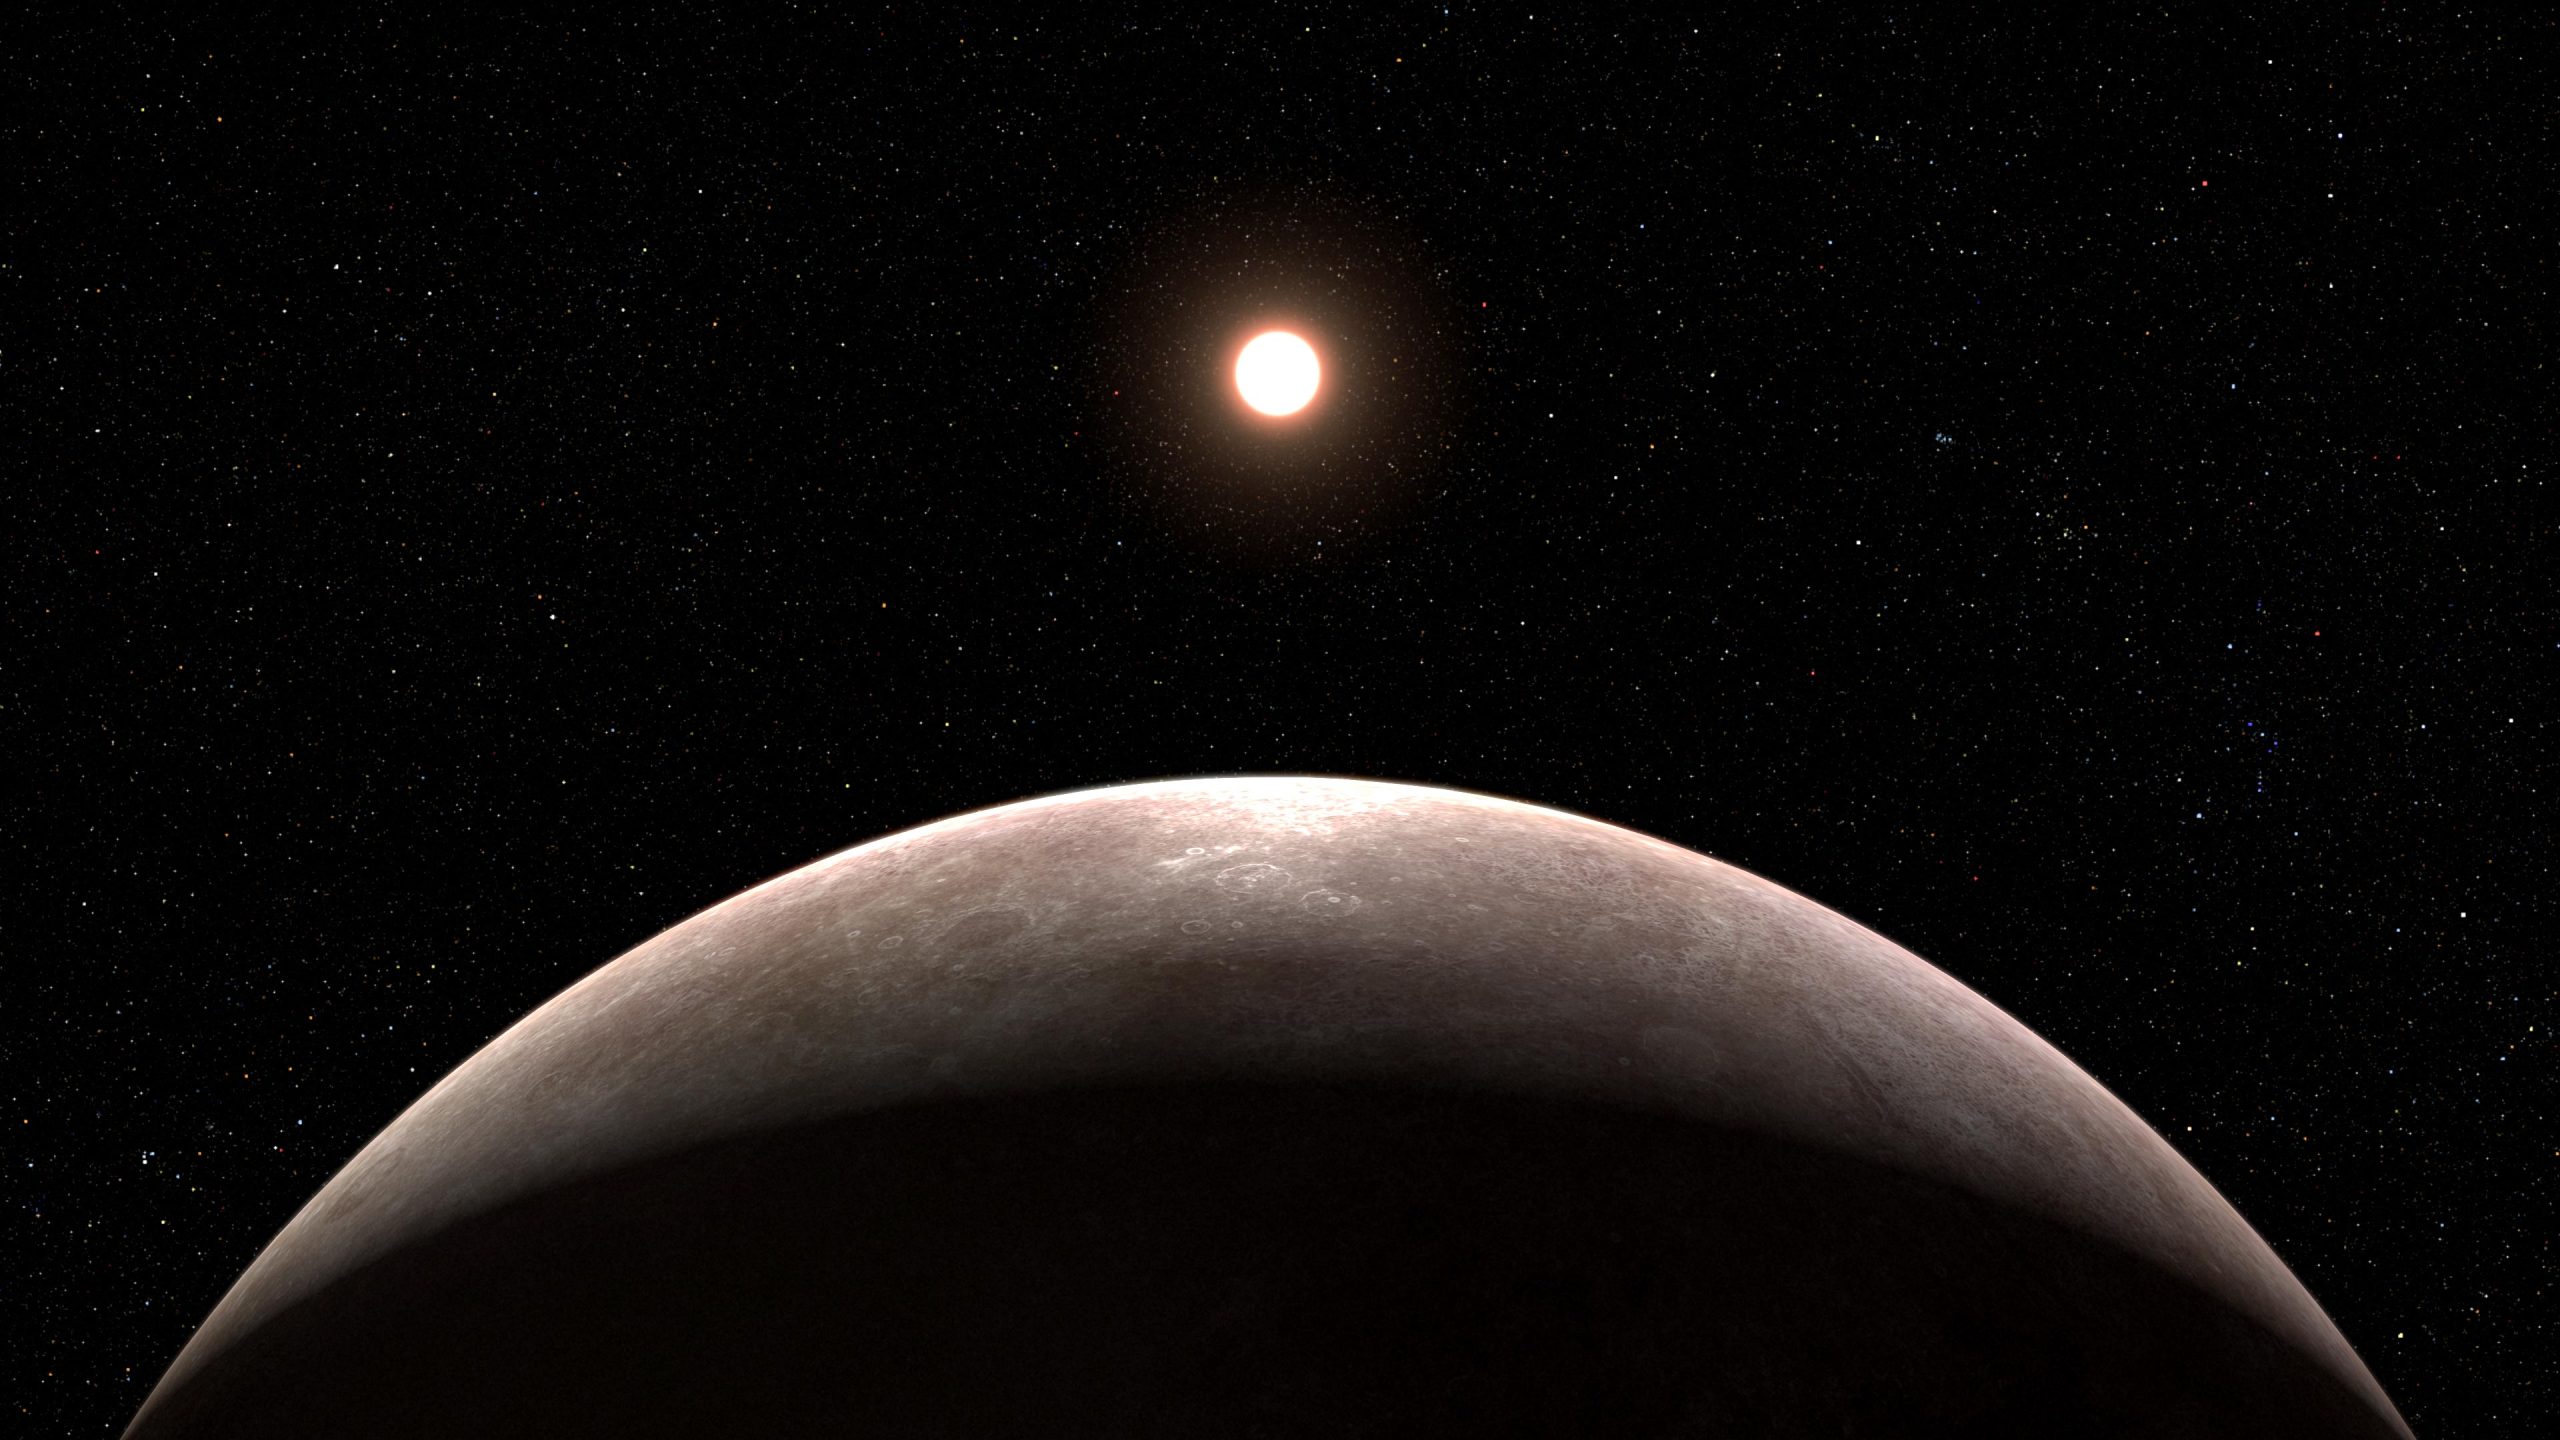 NASA のウェッブ宇宙望遠鏡が、地球サイズの岩石系太陽系外惑星の存在を確認しました!